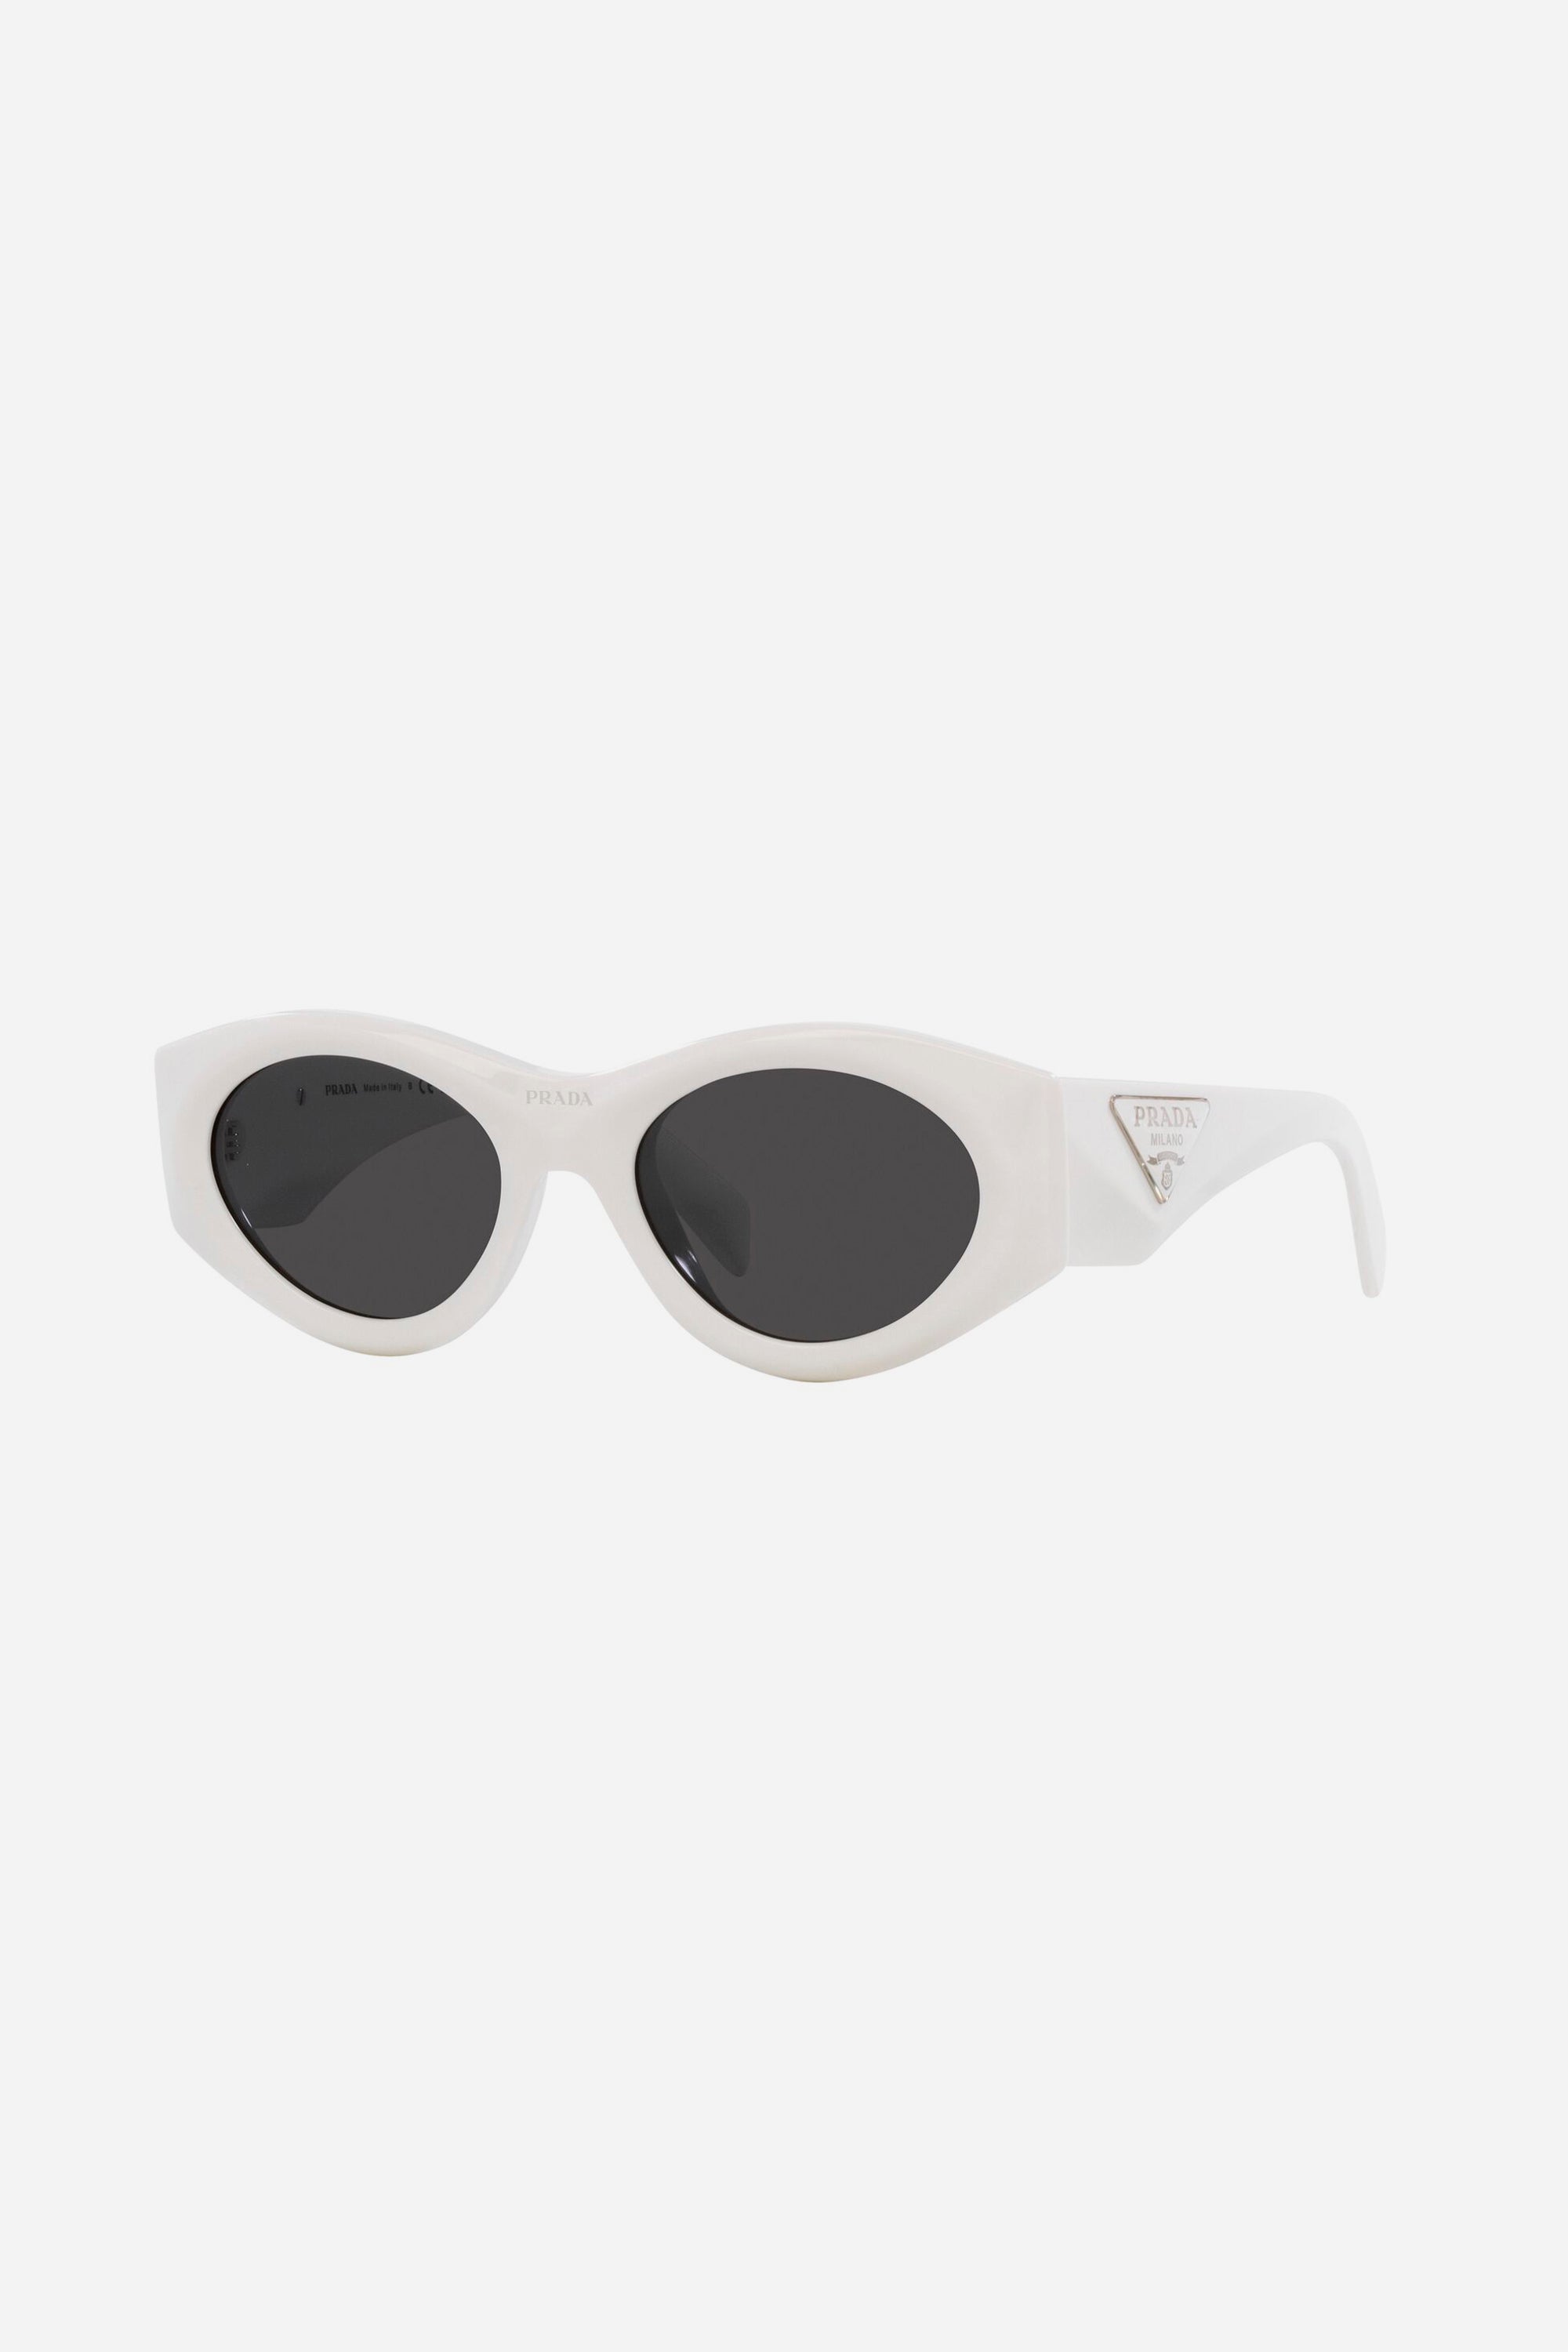 Prada PR20ZS white bold oval sunglasses - Eyewear Club